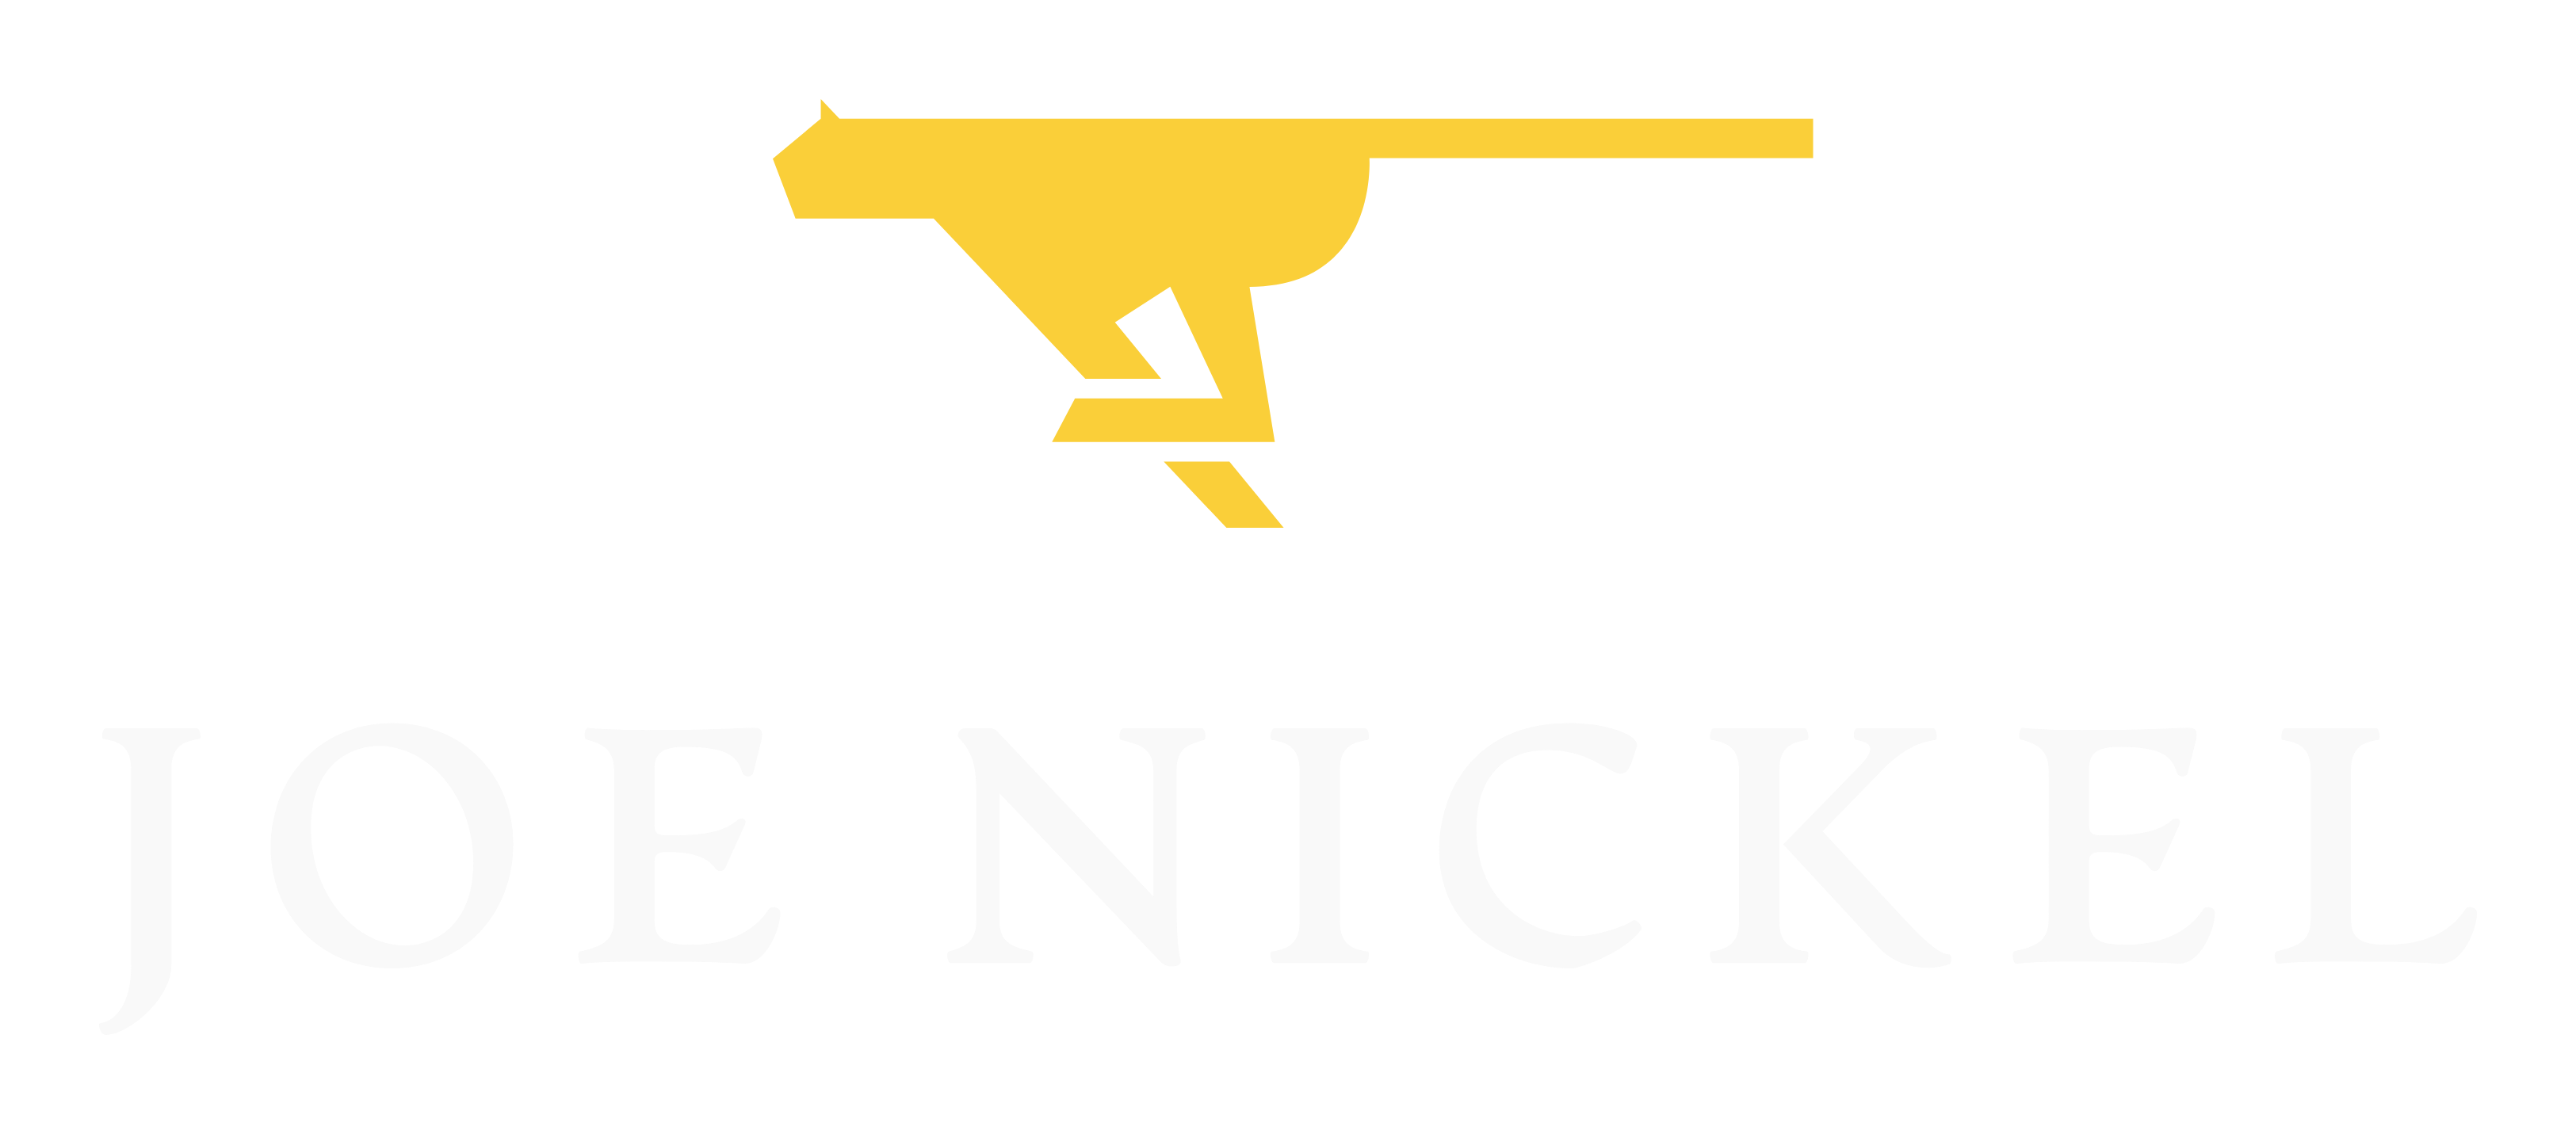 Joe Nickel